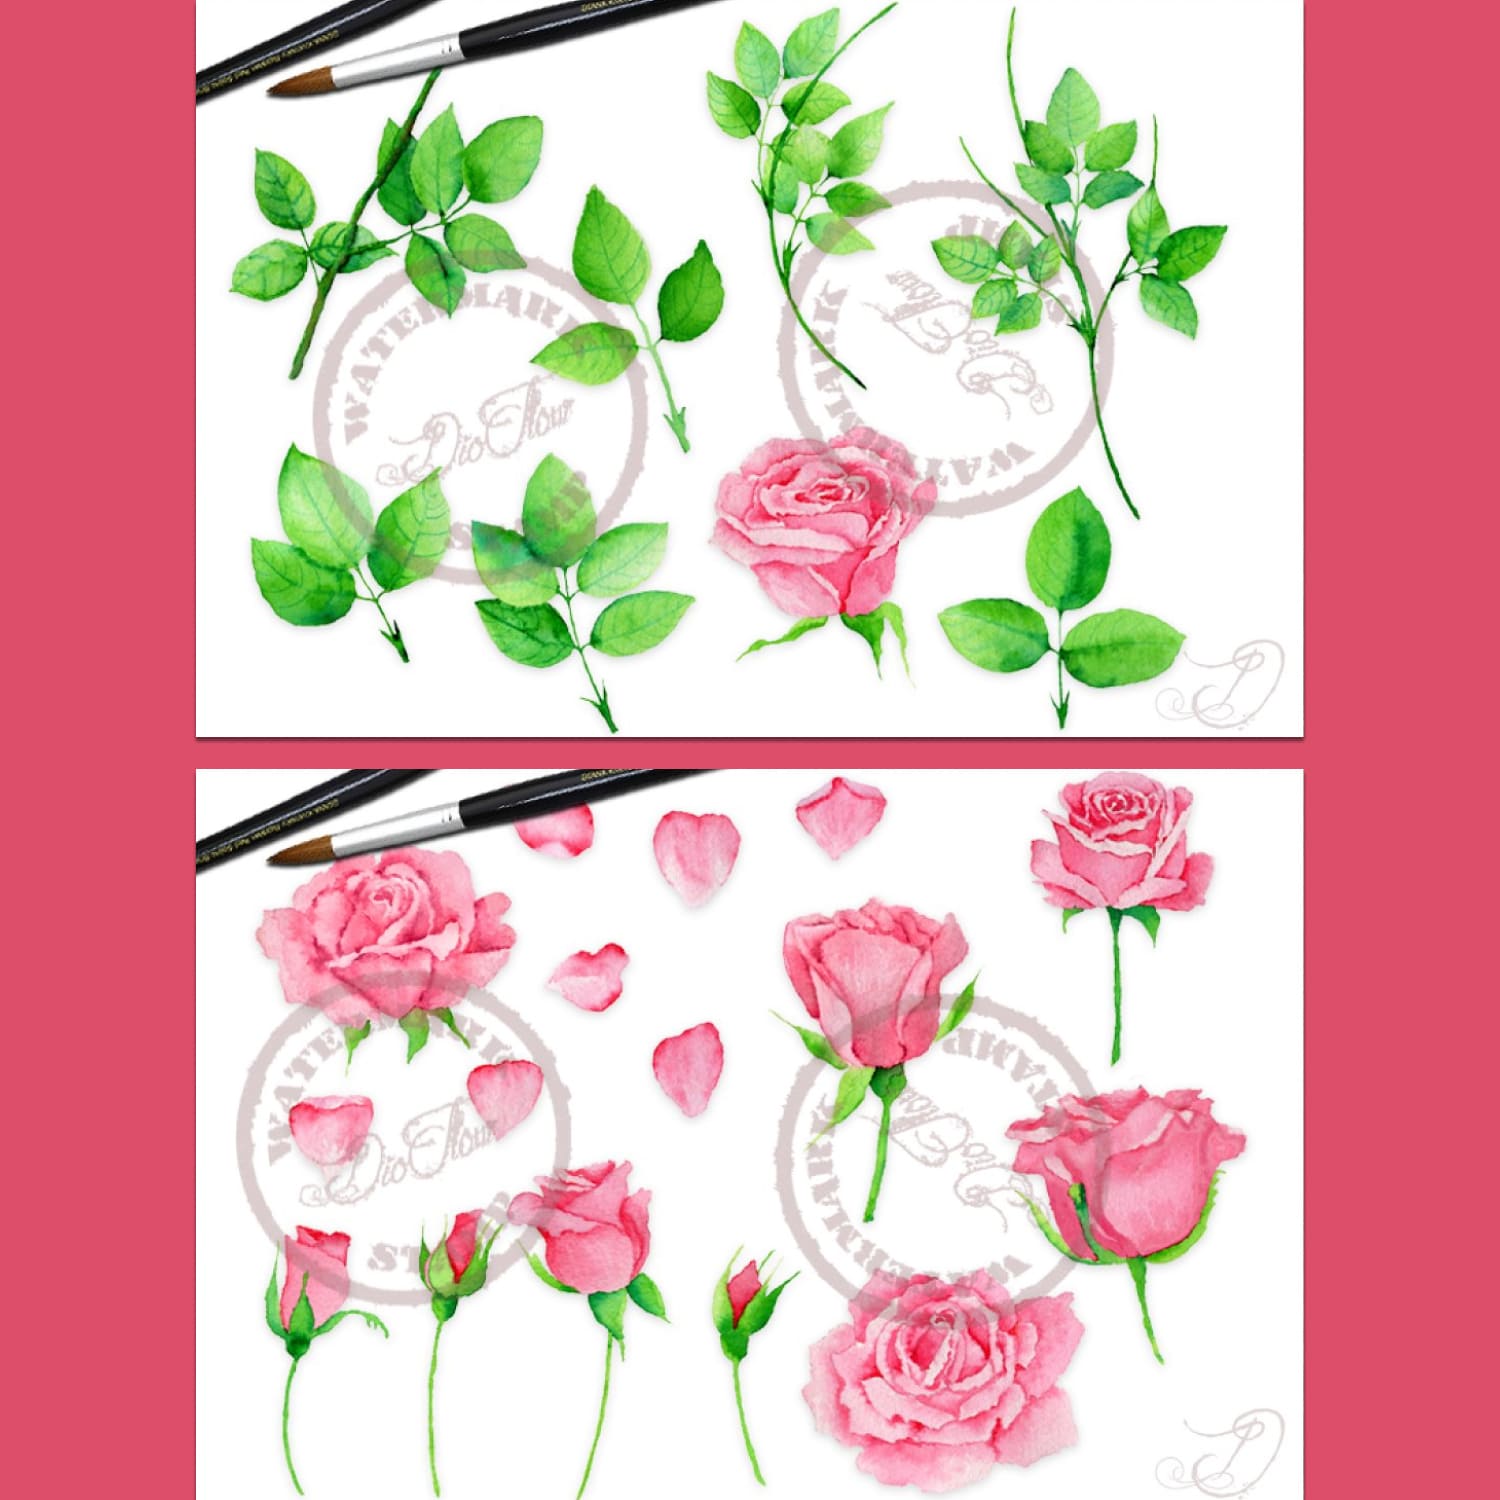 Rose Watercolor Clip Art cover.